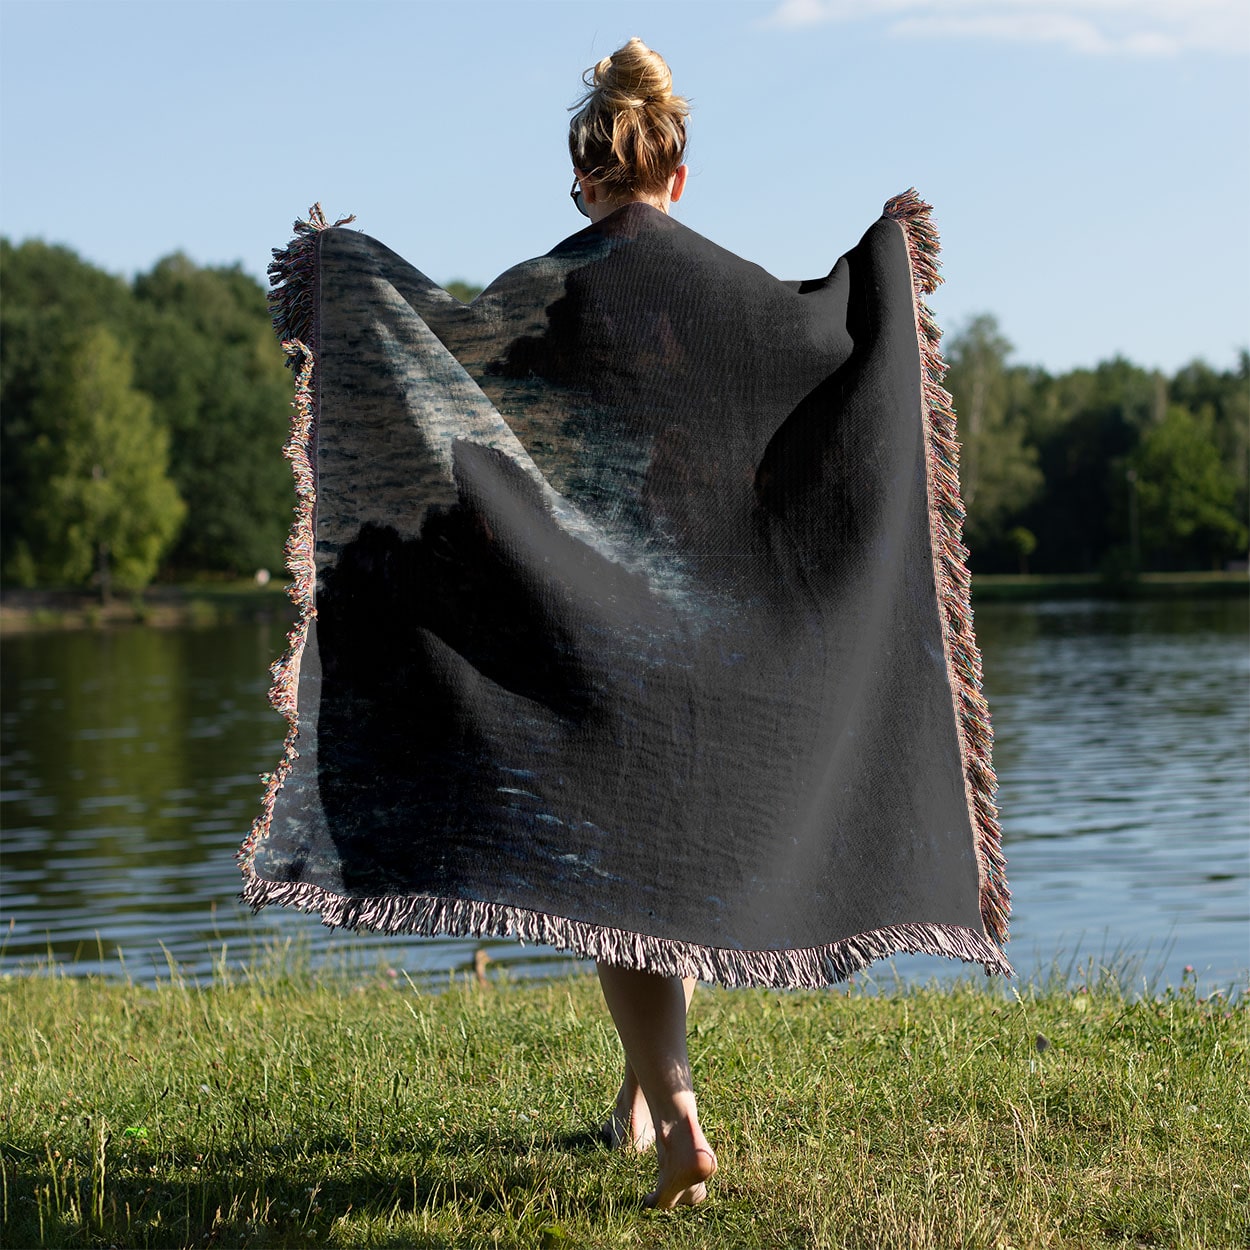 Dark Sea Woven Blanket Held on a Woman's Back Outside